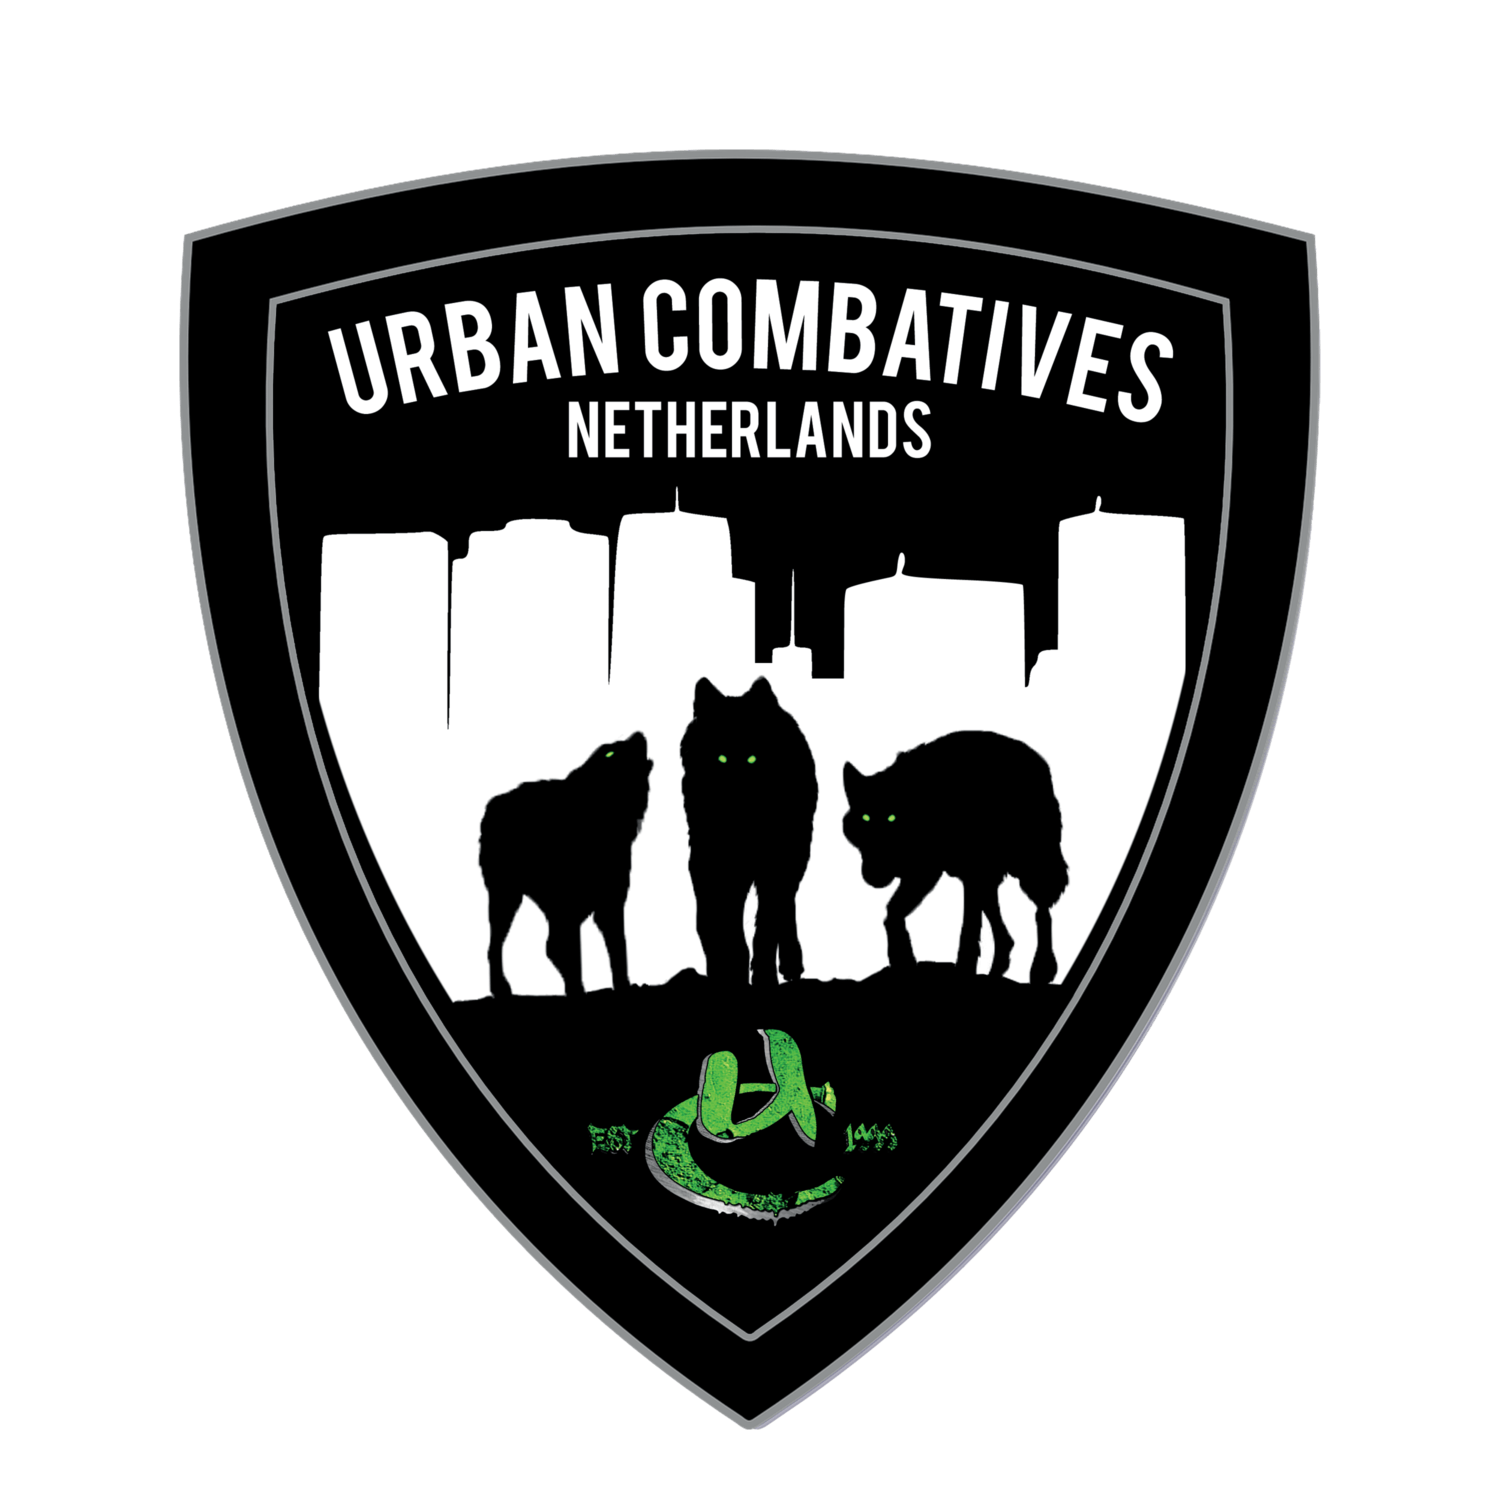 Combatives Logo - Urban Combatives Netherlands